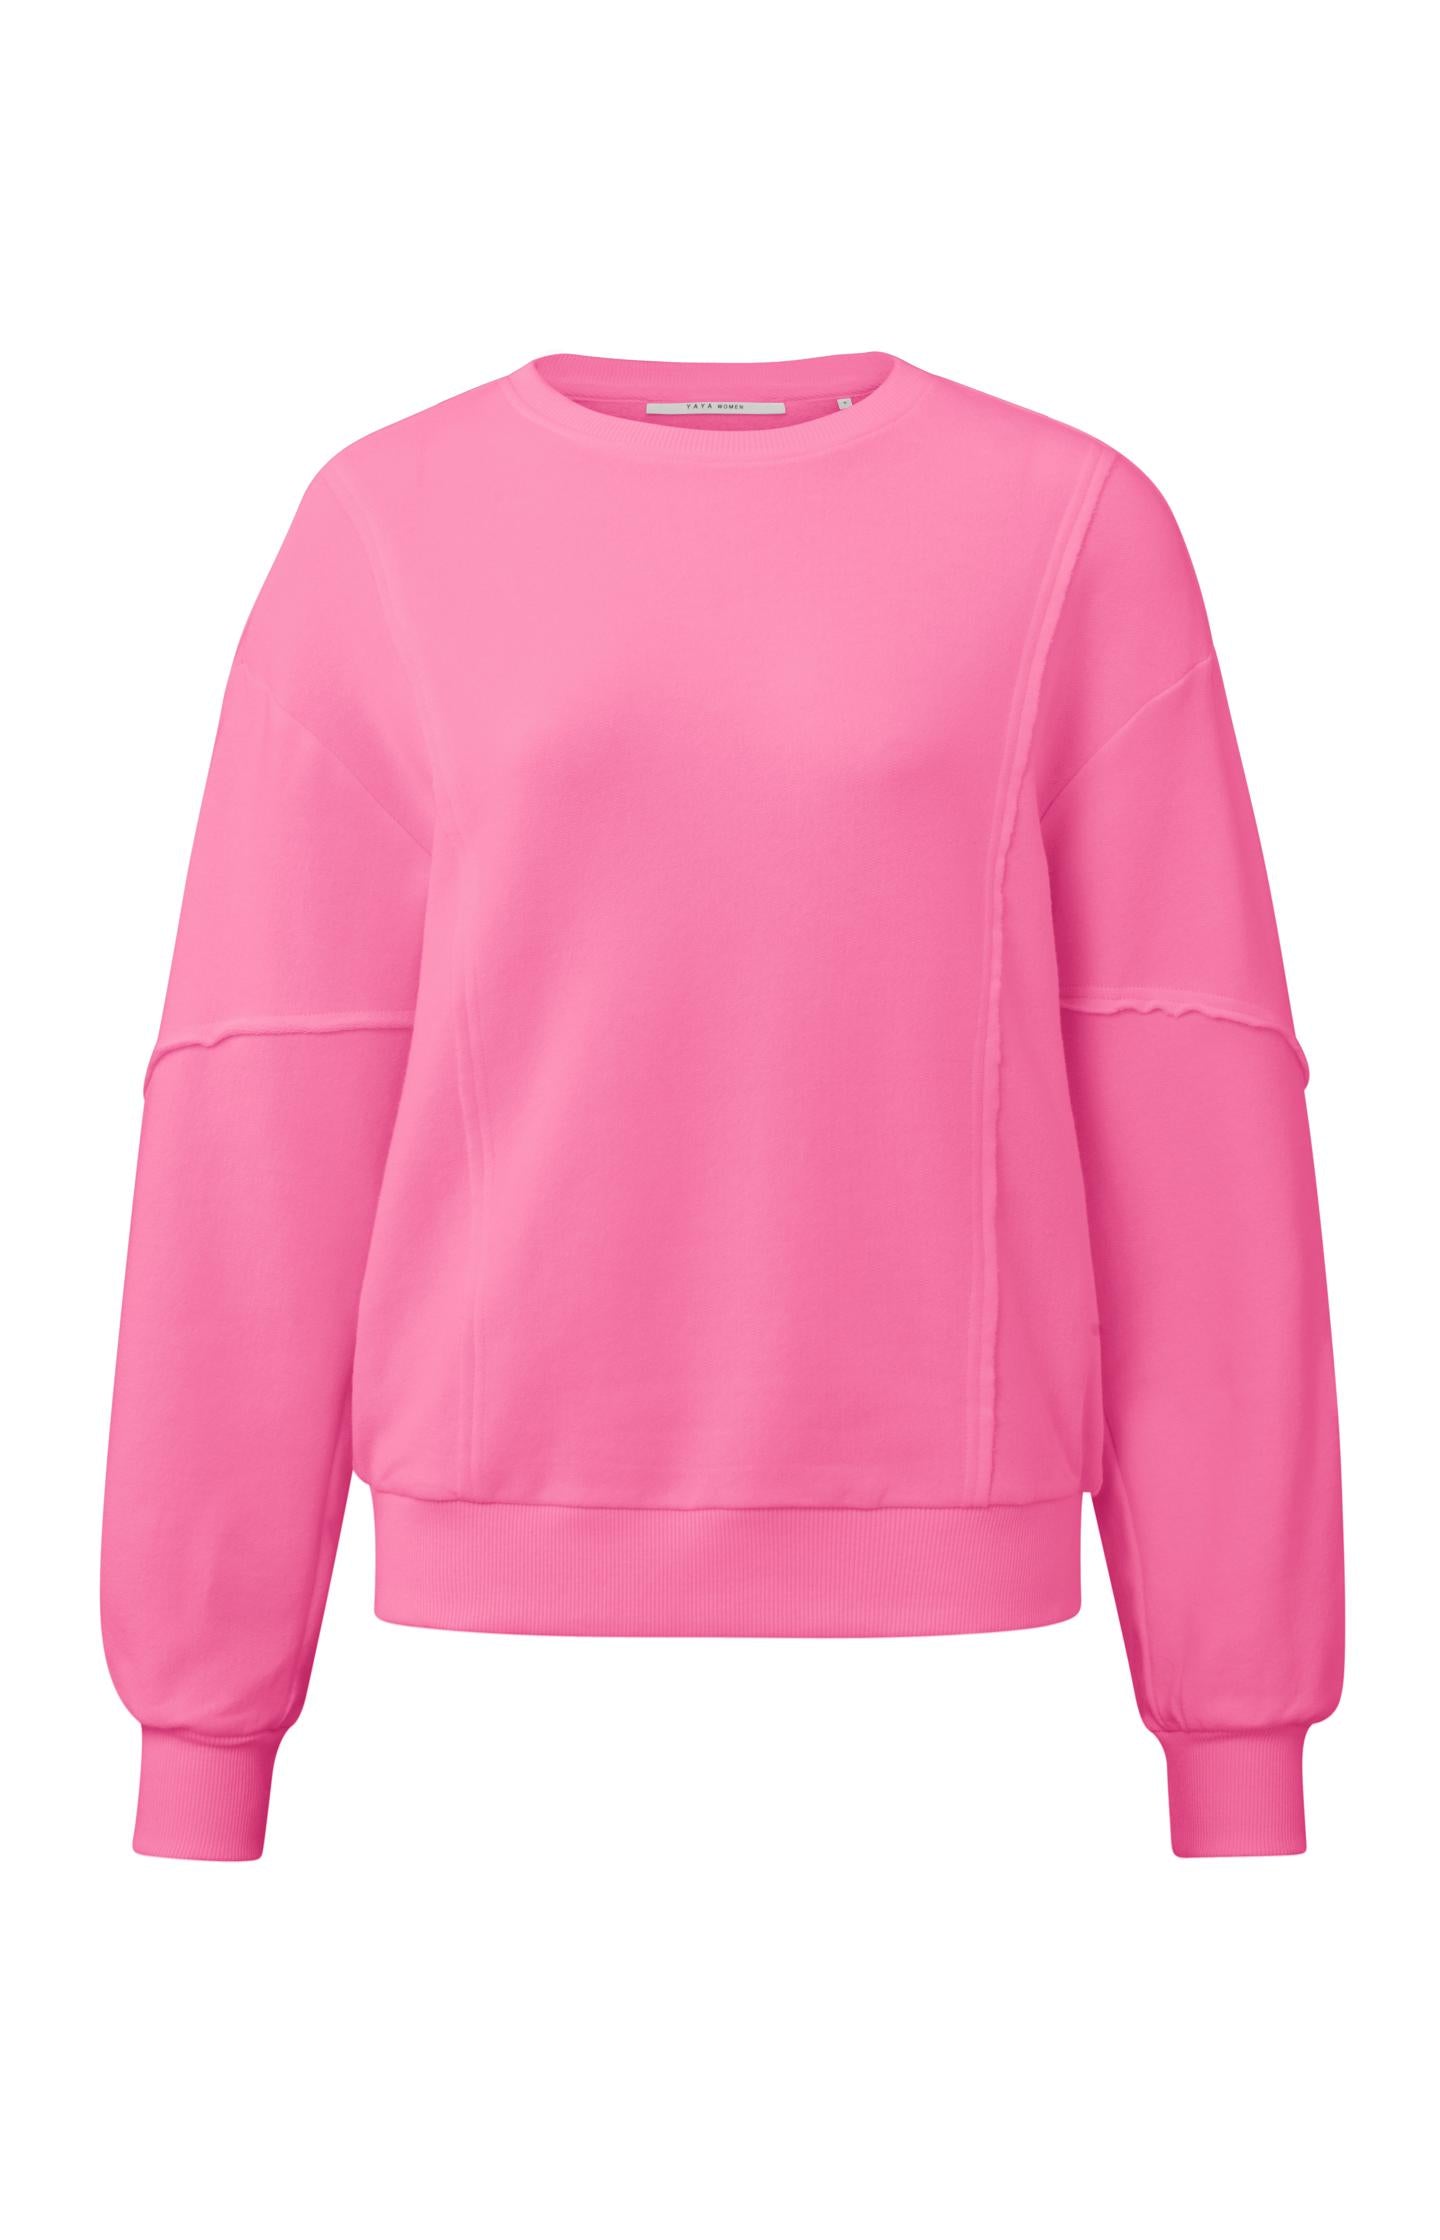 Sweatshirt with raw edge seams | Cosmos Pink - Harrison Fashion